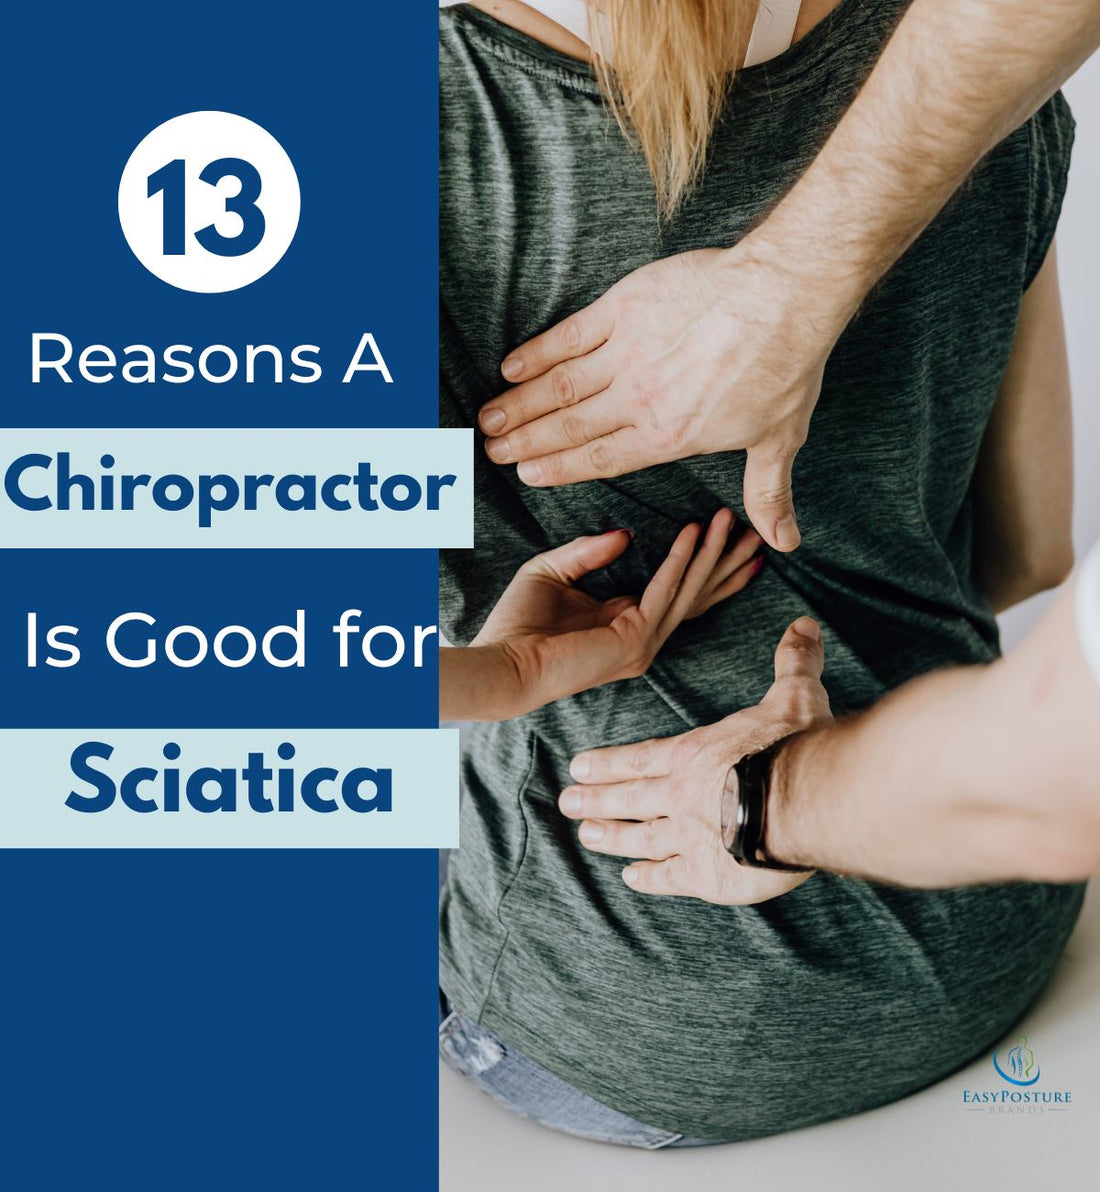 chiropractor is good for sciatica